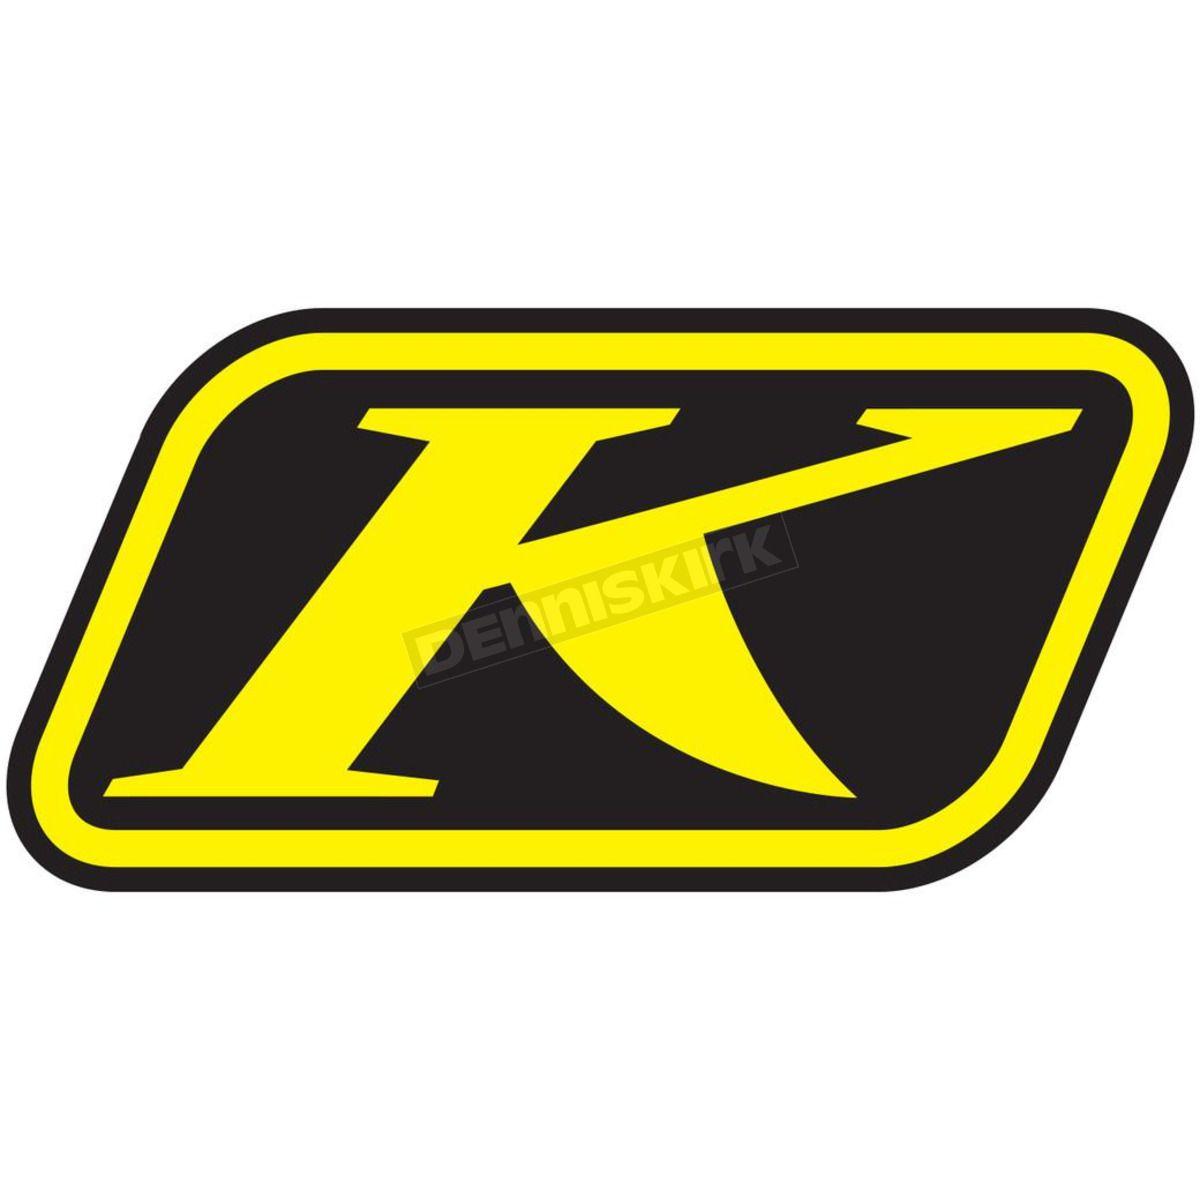 Klim Logo - K Decal - 9301-003-008-000